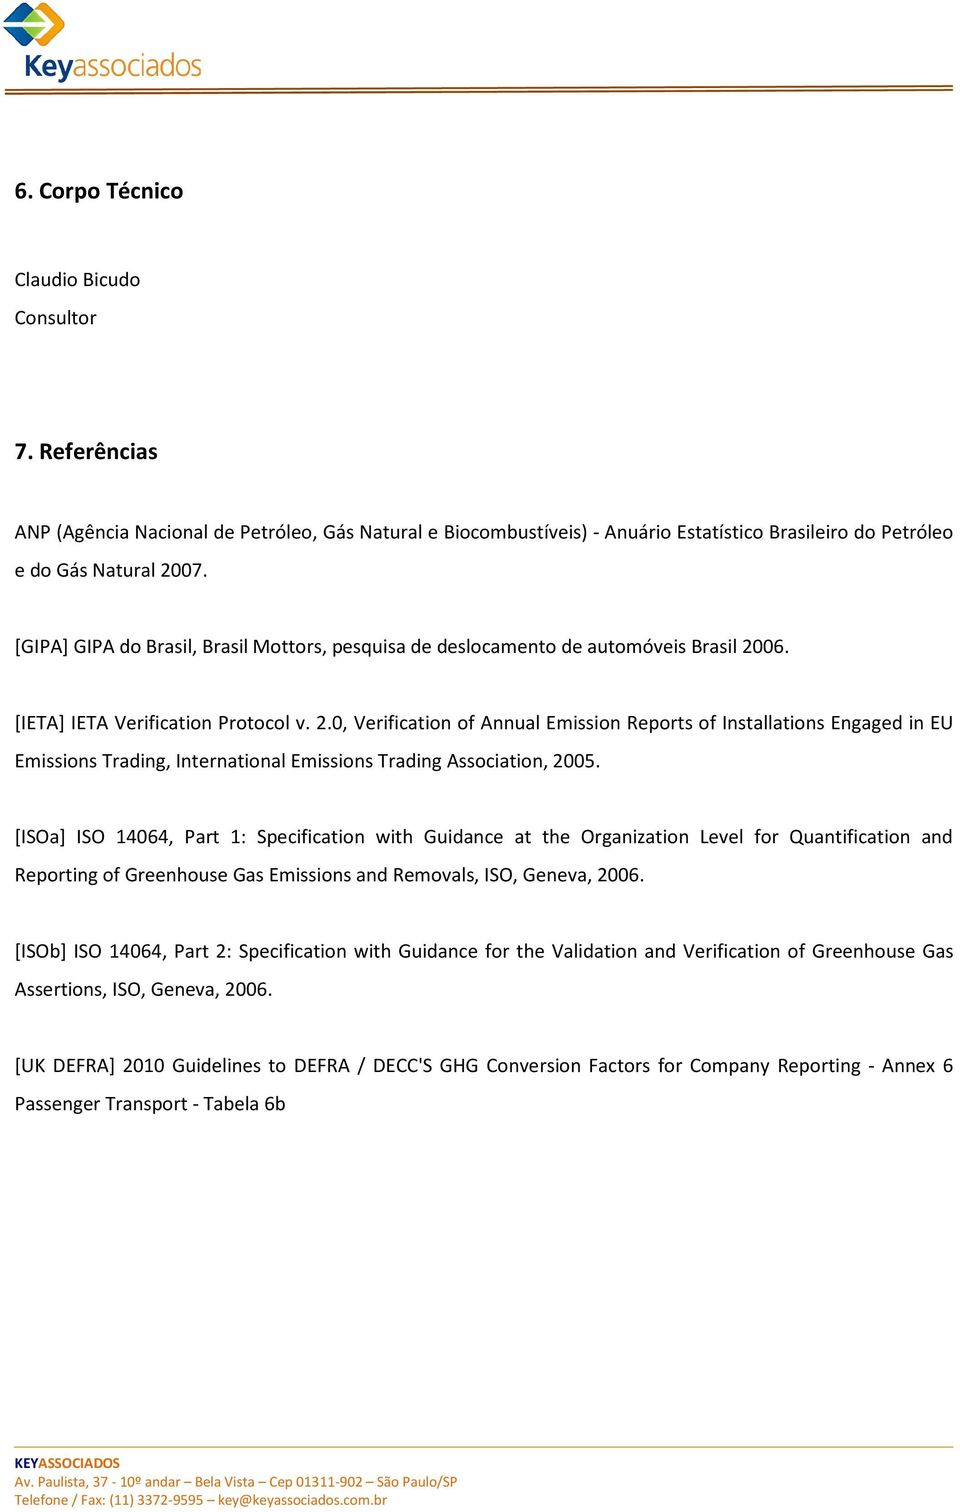 06. [IETA] IETA Verification Protocol v. 2.0, Verification of Annual Emission Reports of Installations Engaged in EU Emissions Trading, International Emissions Trading Association, 2005.